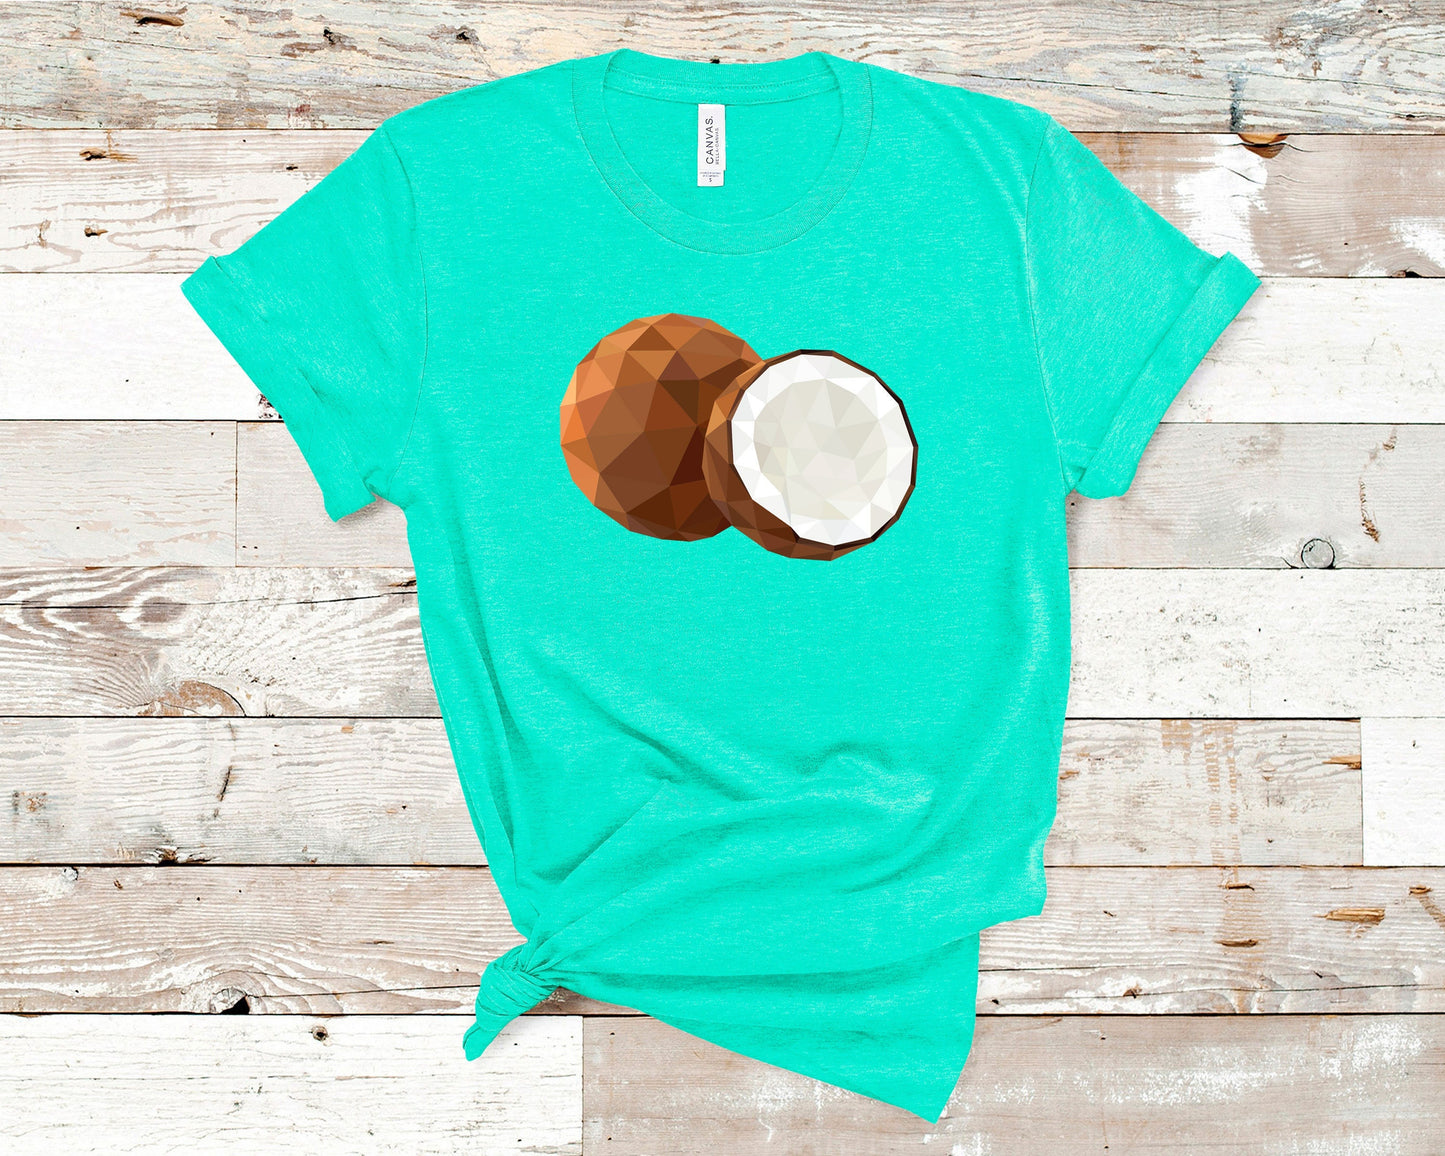 Pixelated Coconut T-Shirt